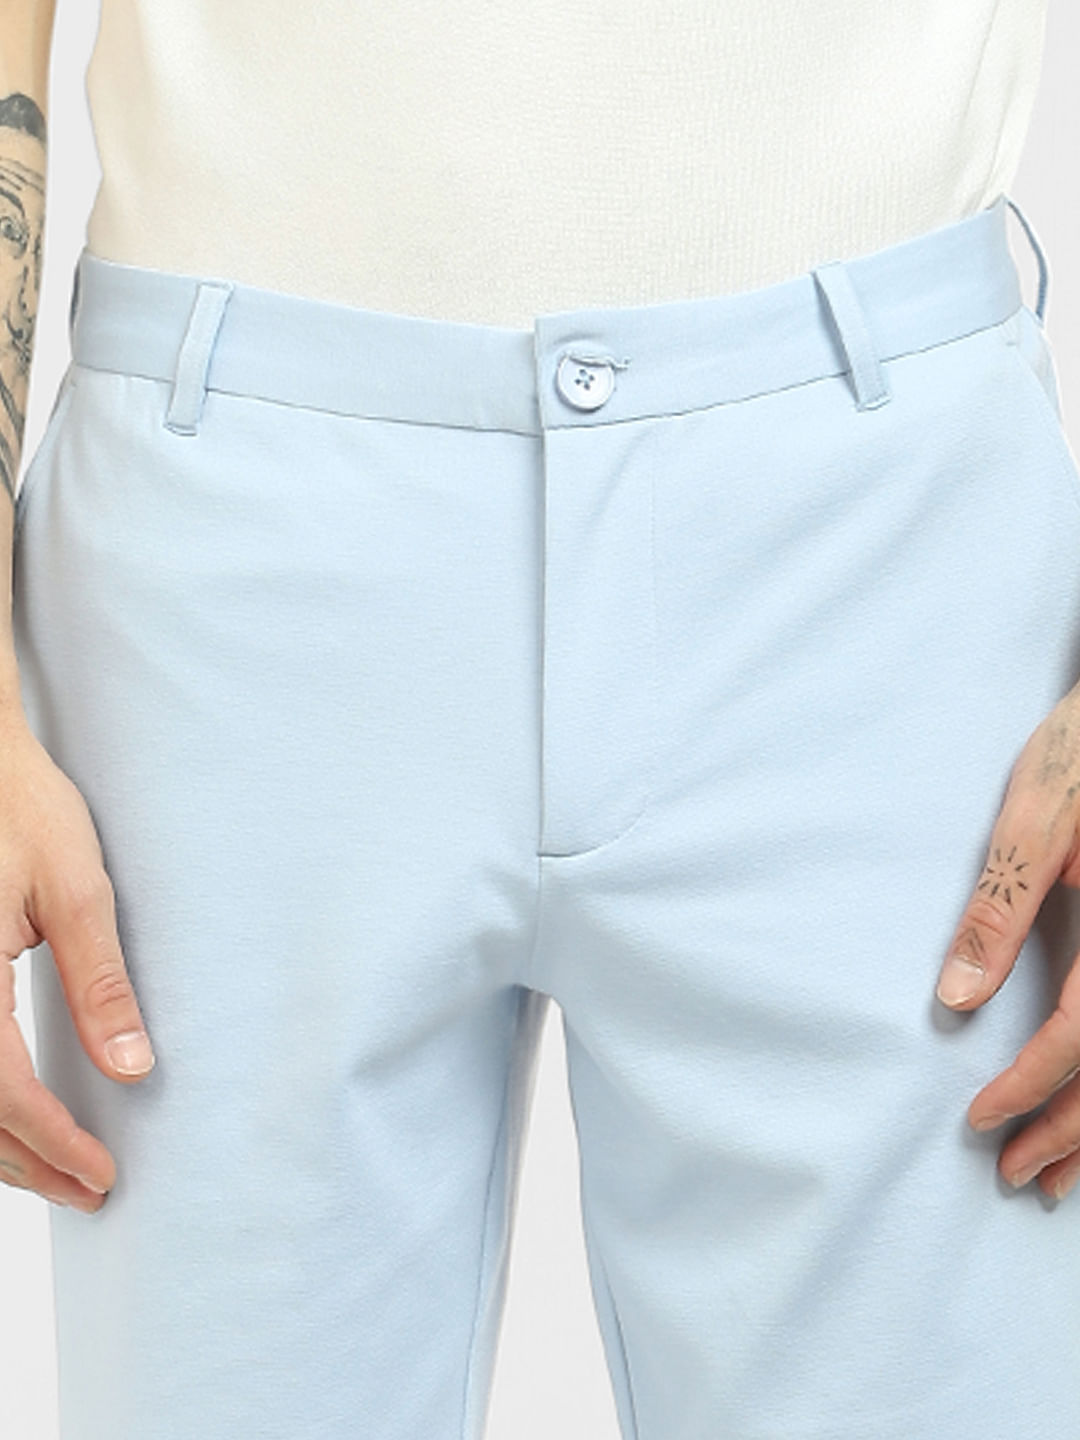 Light Blue Trousers - Straight Leg Trousers - High Rise Pants - Lulus